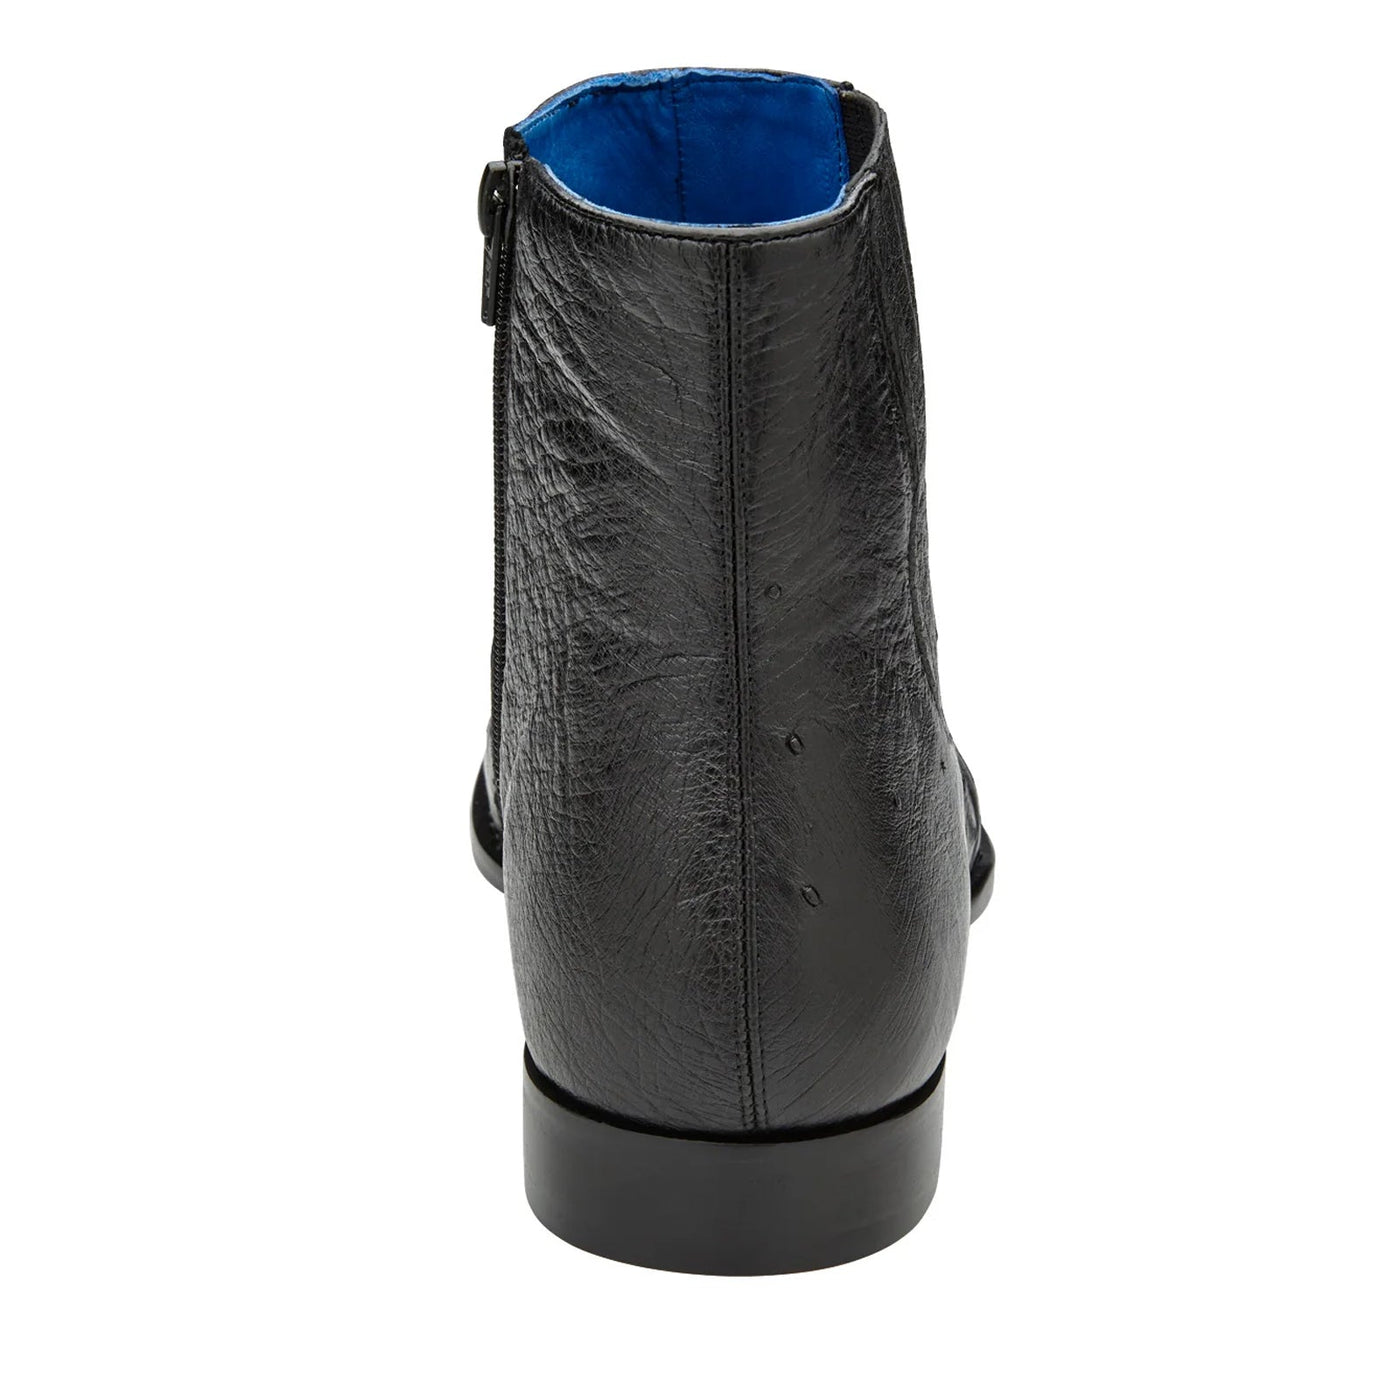 Men's Belvedere Roger Ostrich Quill Dress Boot in Black